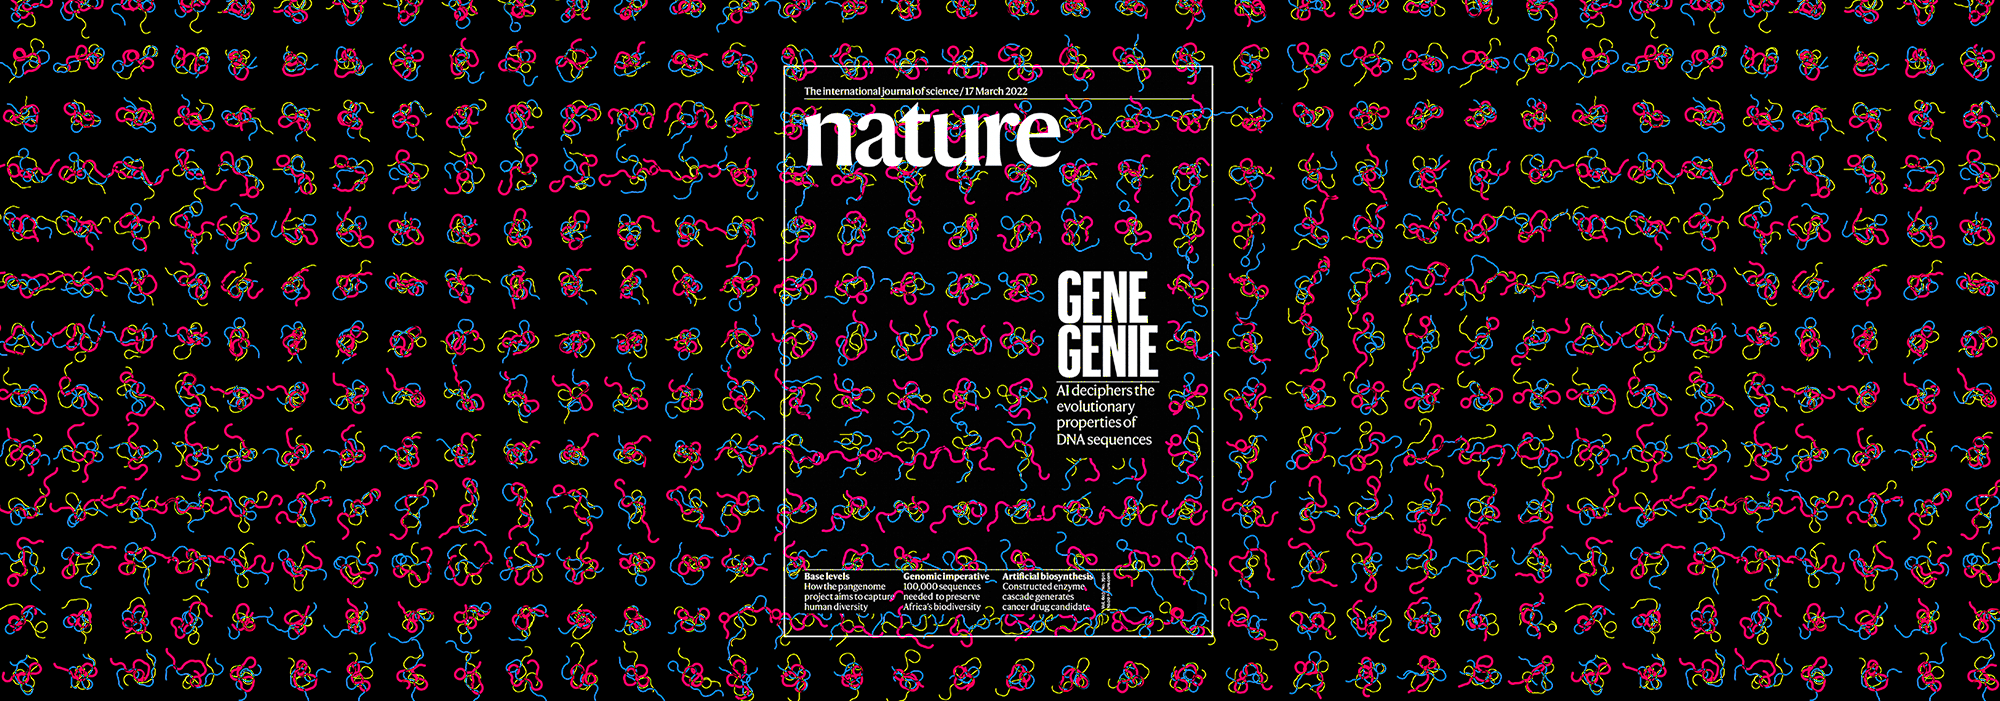 GENE GENIE Martin Krzywinski / science + art / Canada's Michael Smith Genome Sciences Center / http://mkweb.bcgsc.ca